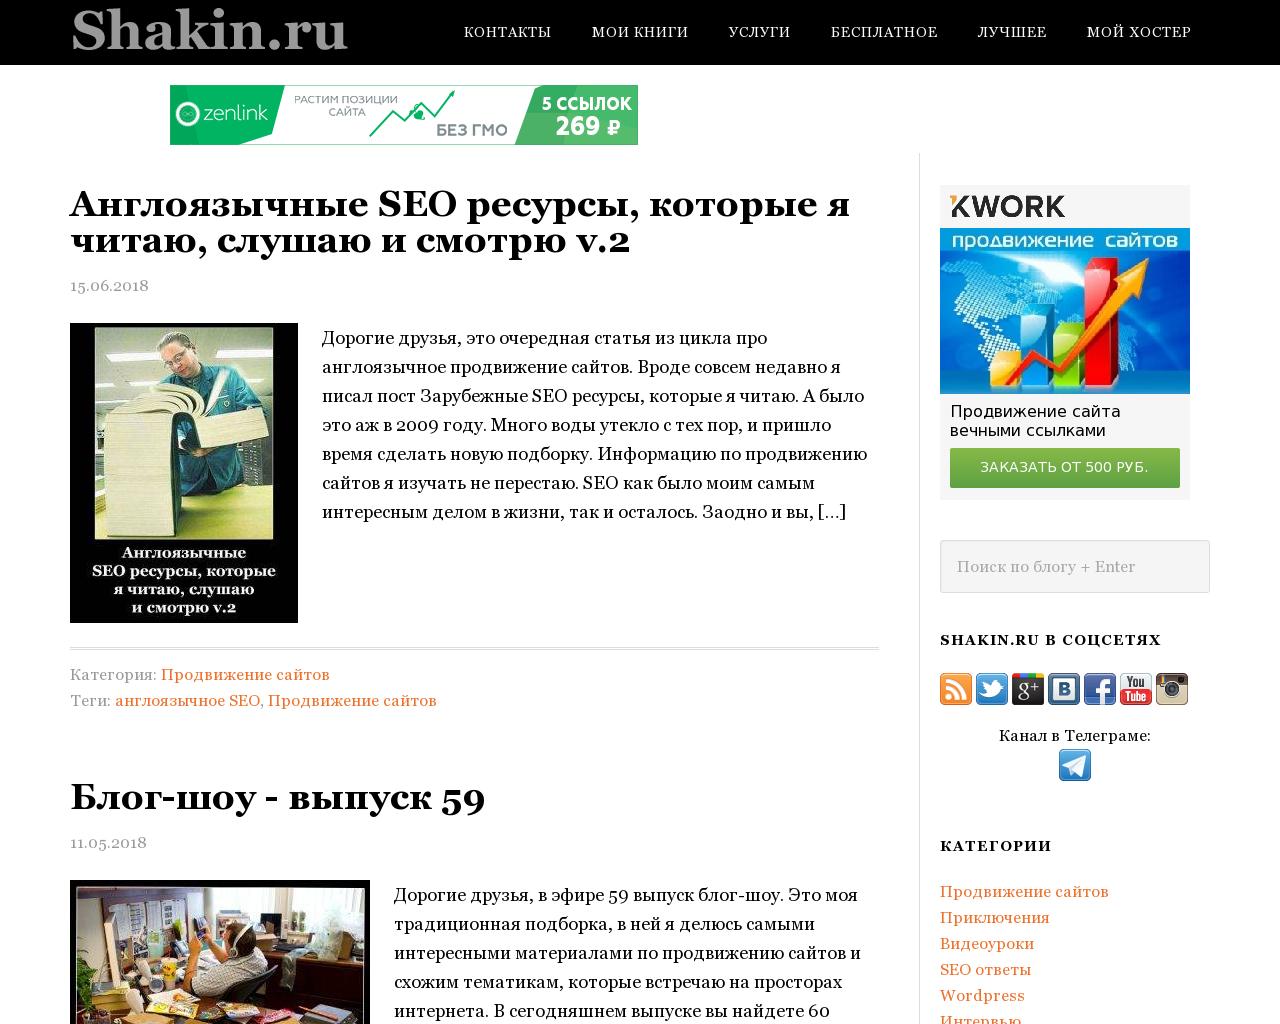 Изображение сайта shakin.ru в разрешении 1280x1024